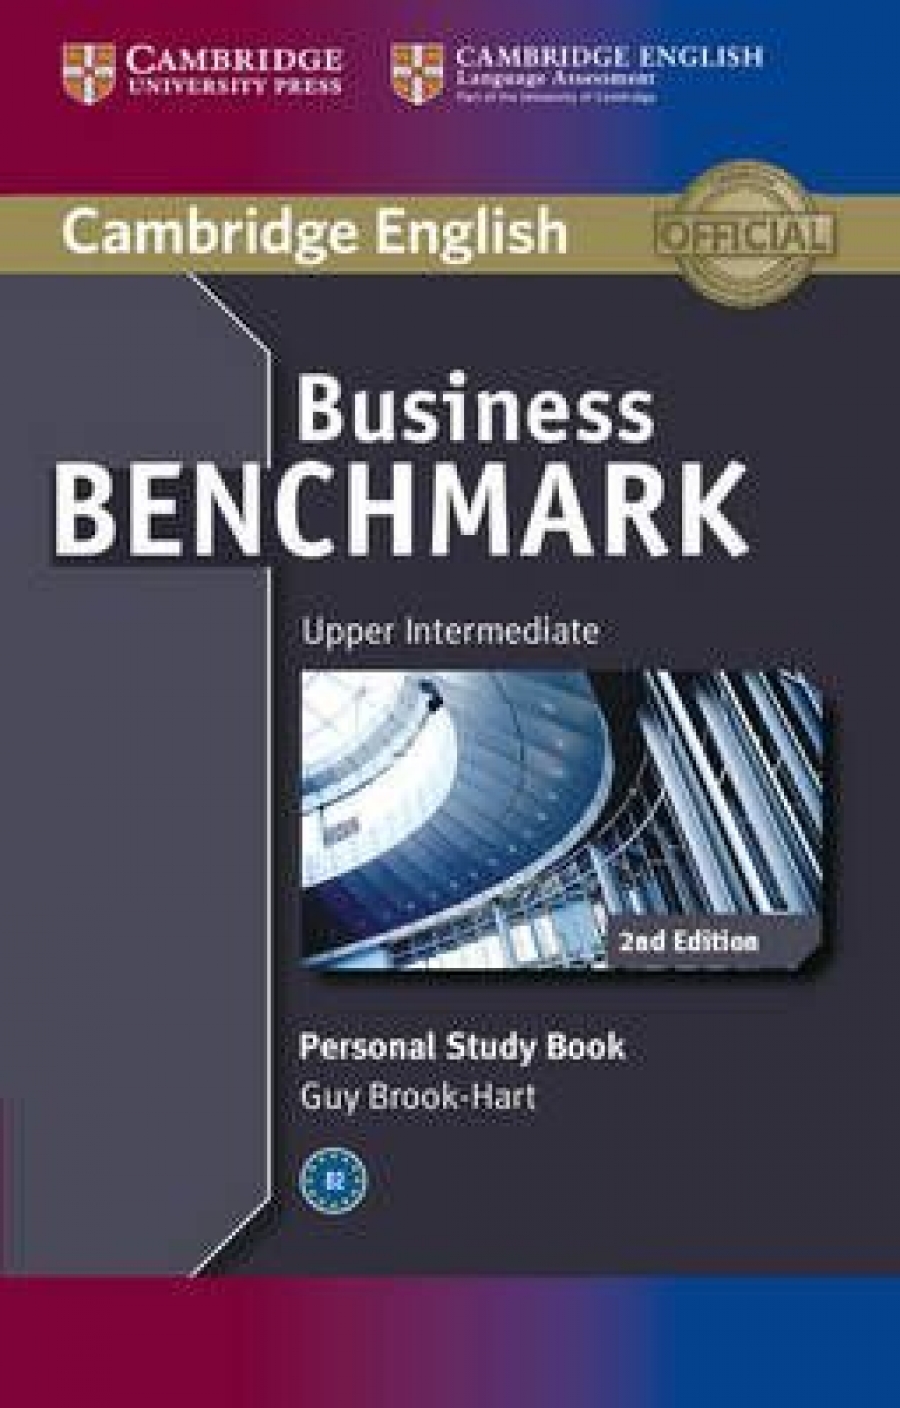 Business Benchmark Upper Intermediate - 2nd Edition